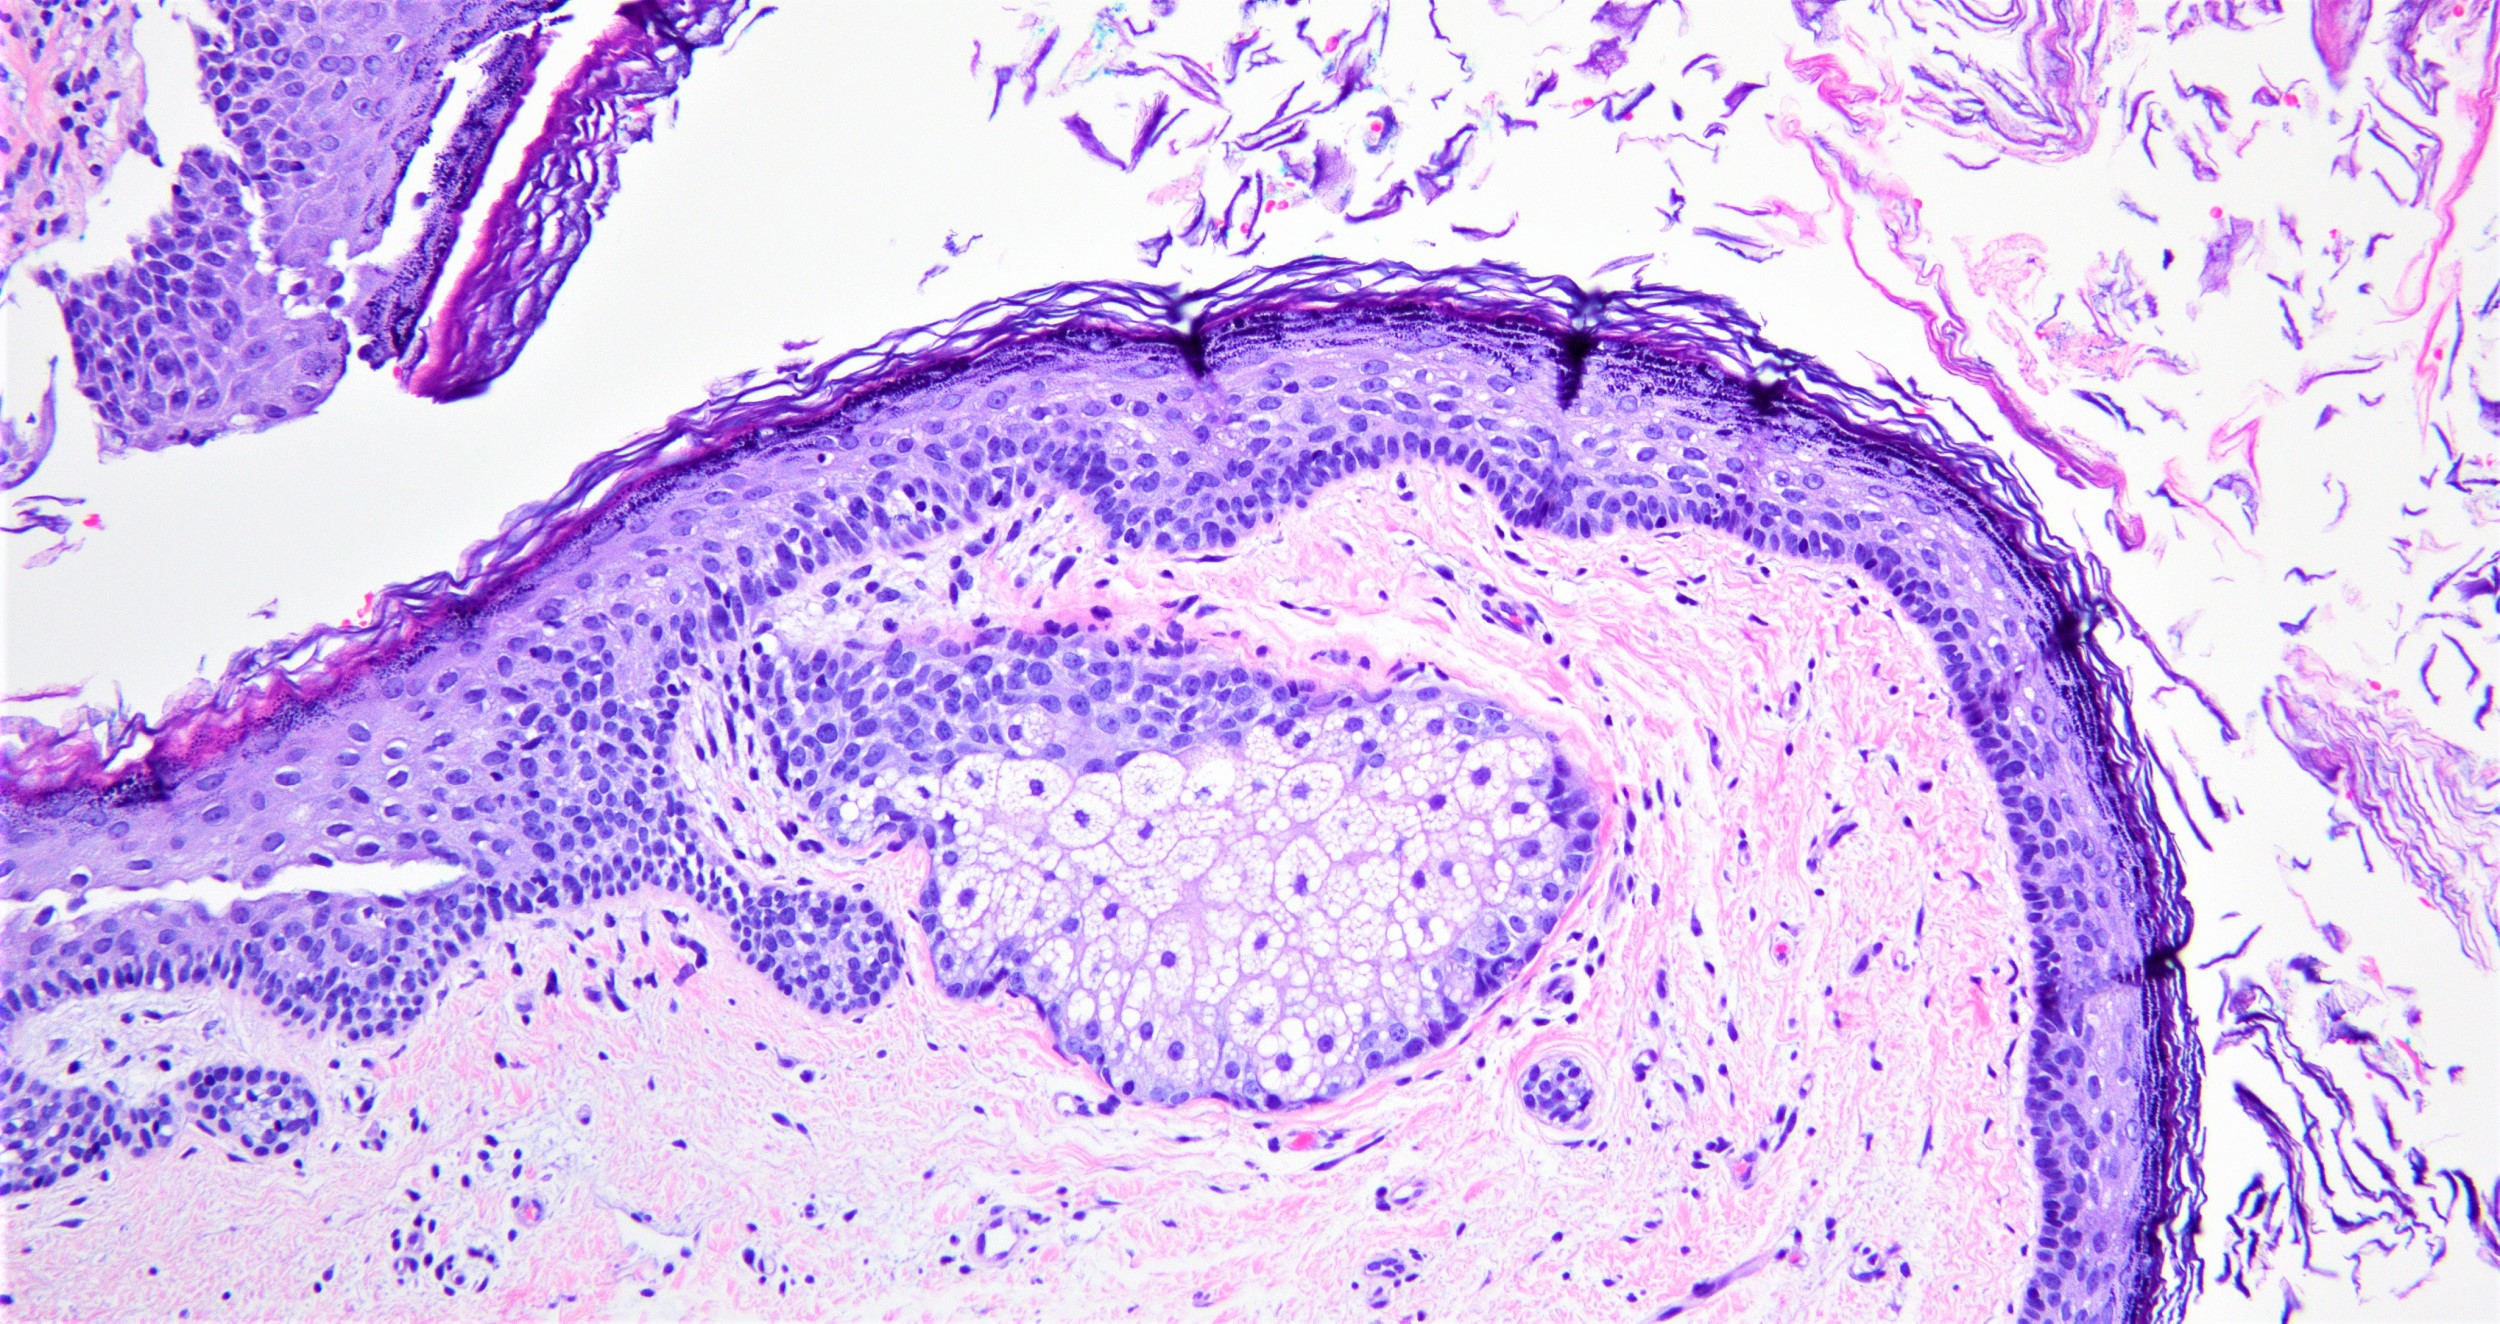 Lining epithelium in dermoid cyst